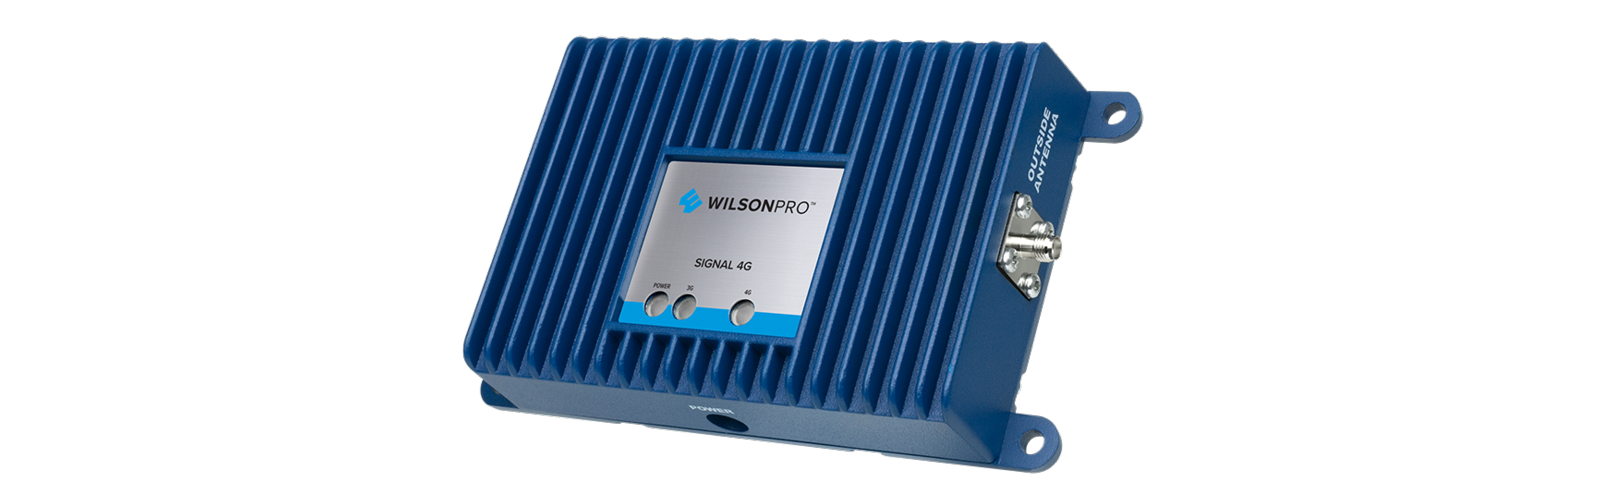 wilson electronics wilson pro 4g signal box 460119